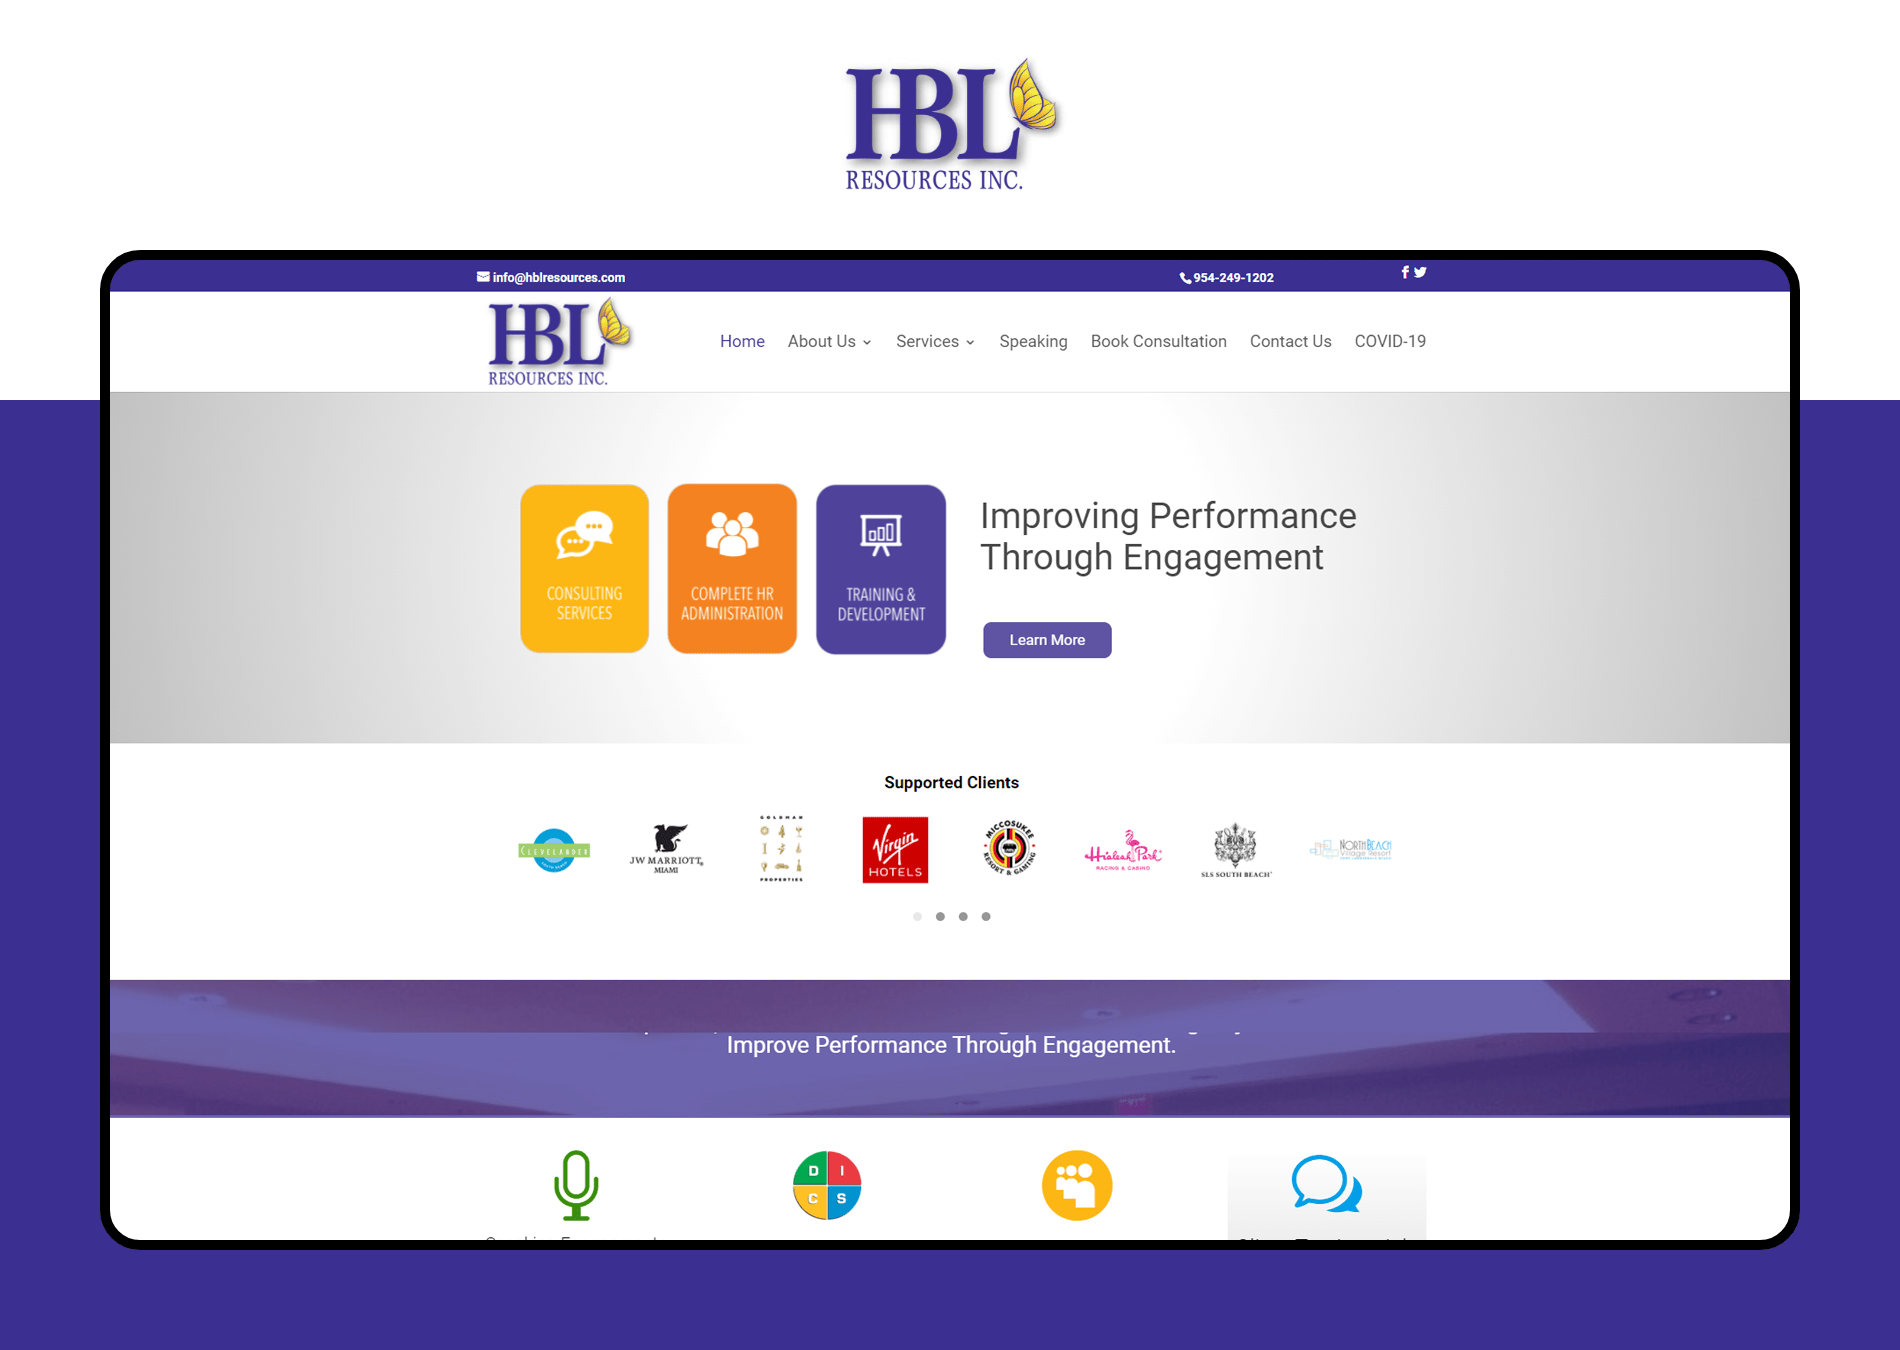 HBL Resources